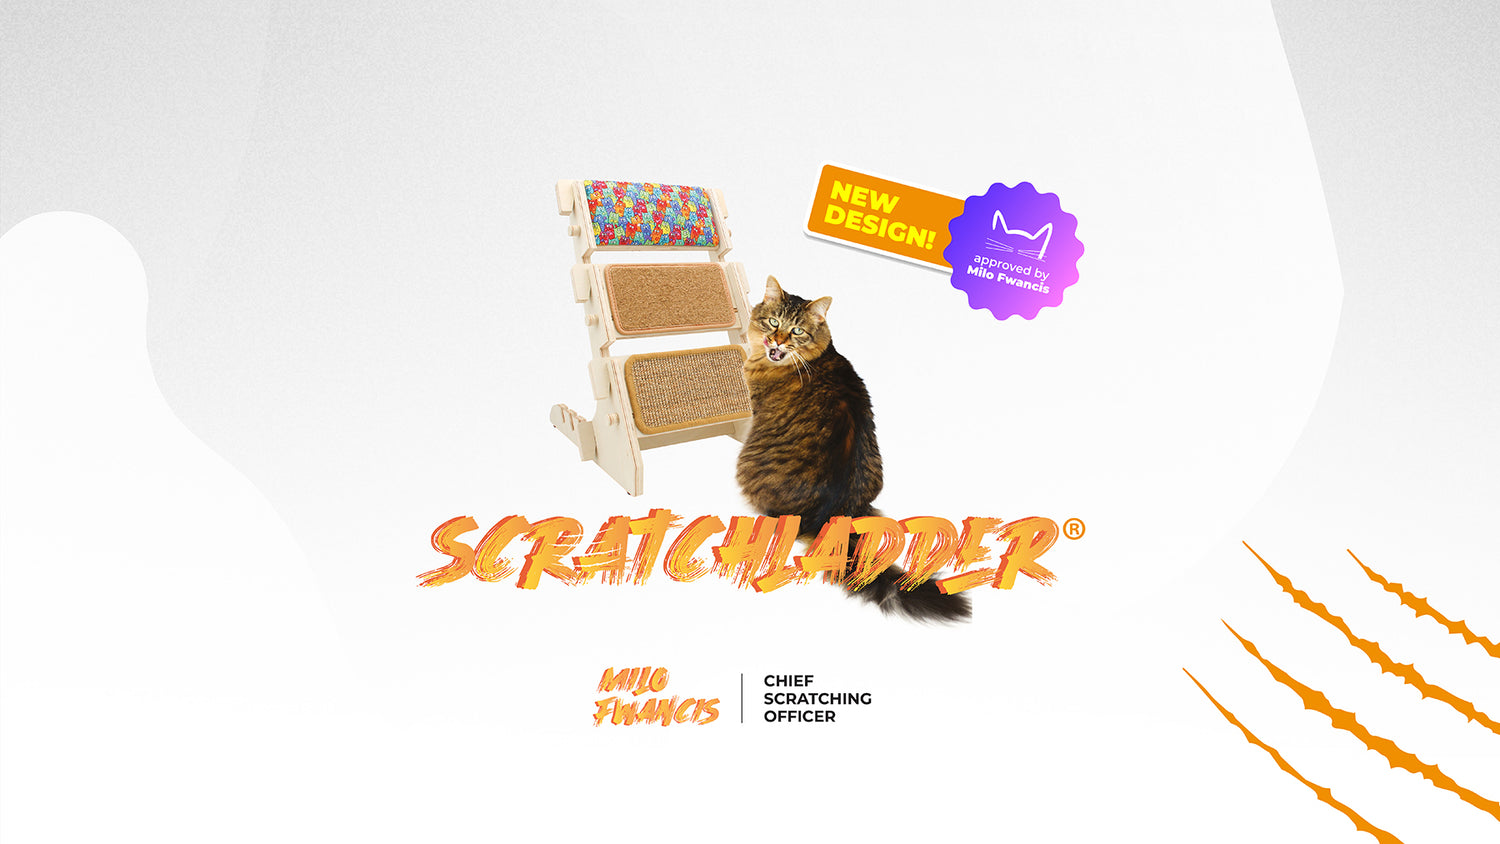 Scratchladder | Scratch Play Meow | Scratch | Milo Fwancis